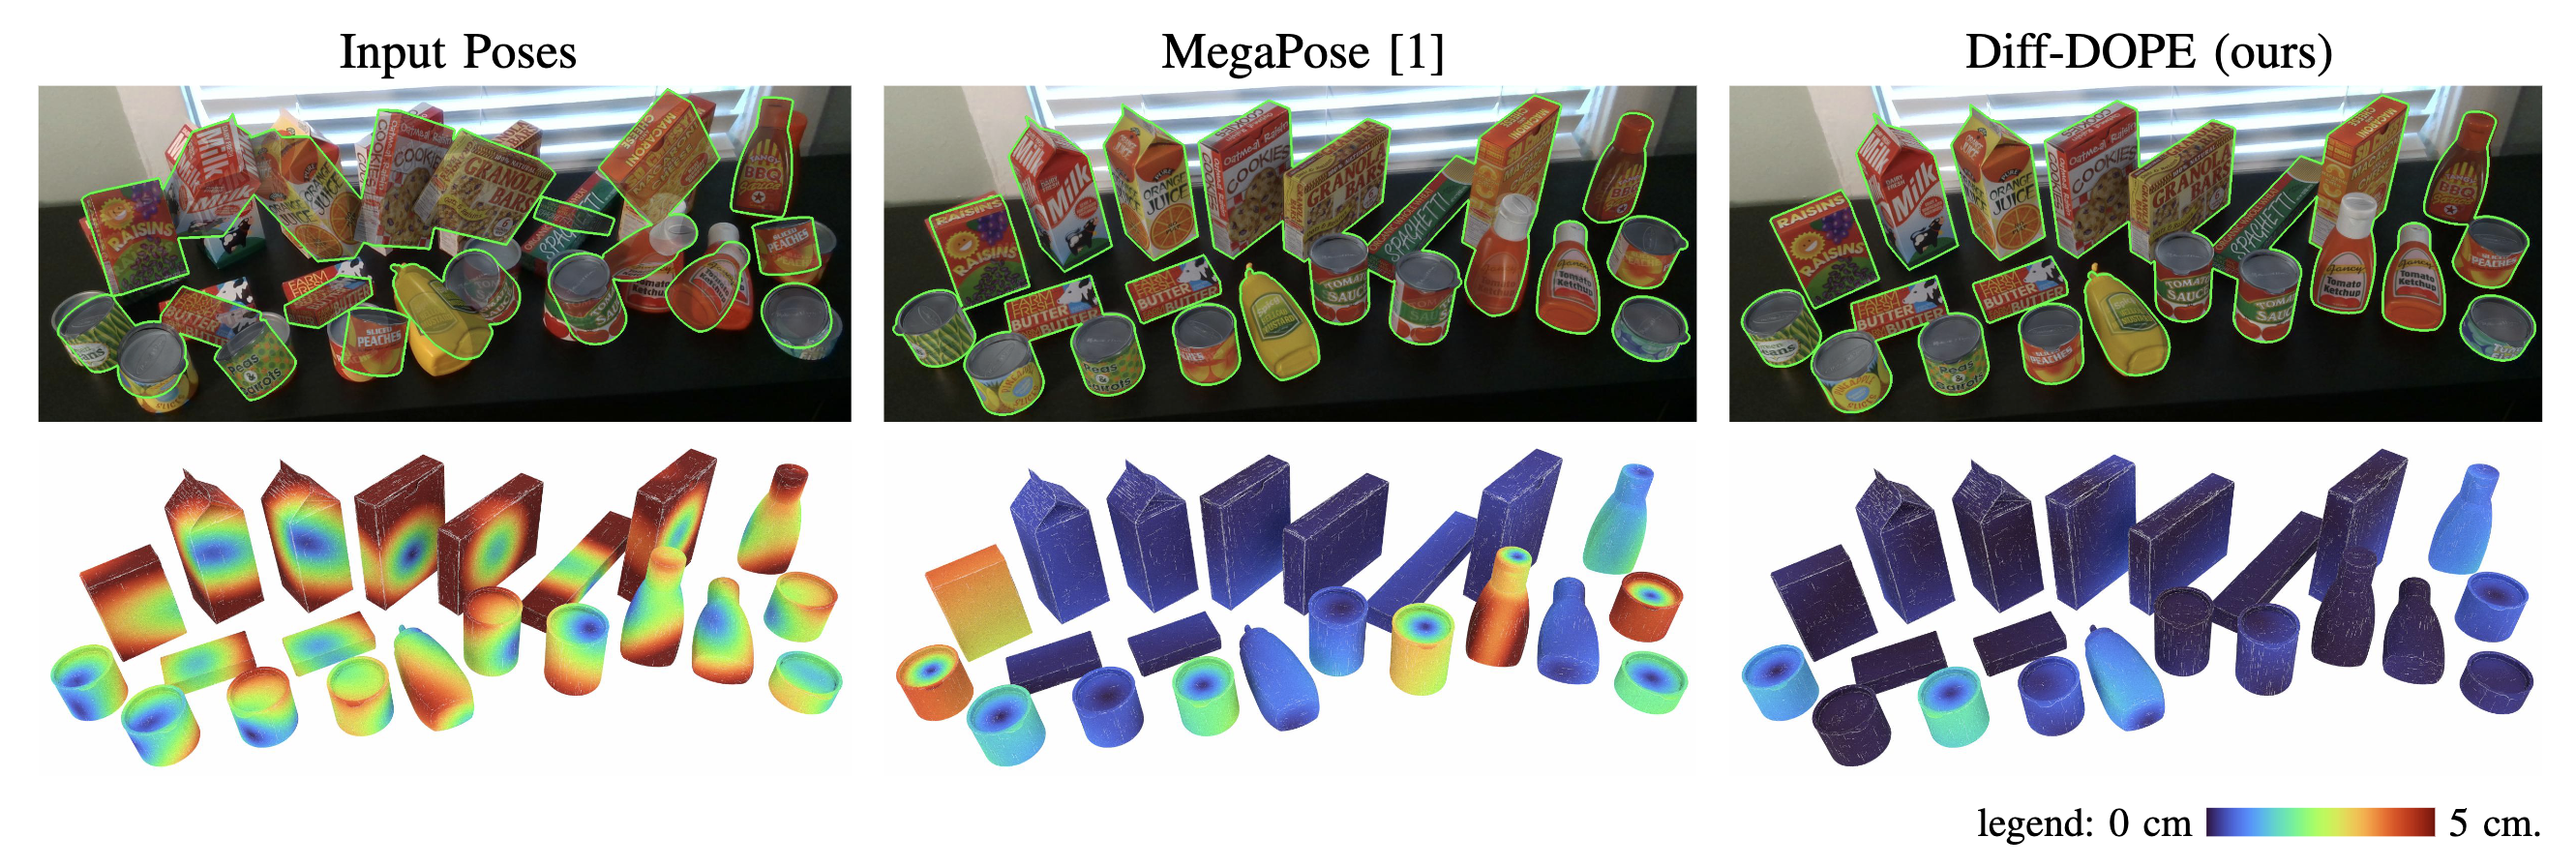 Diff-DOPE compared to megapose